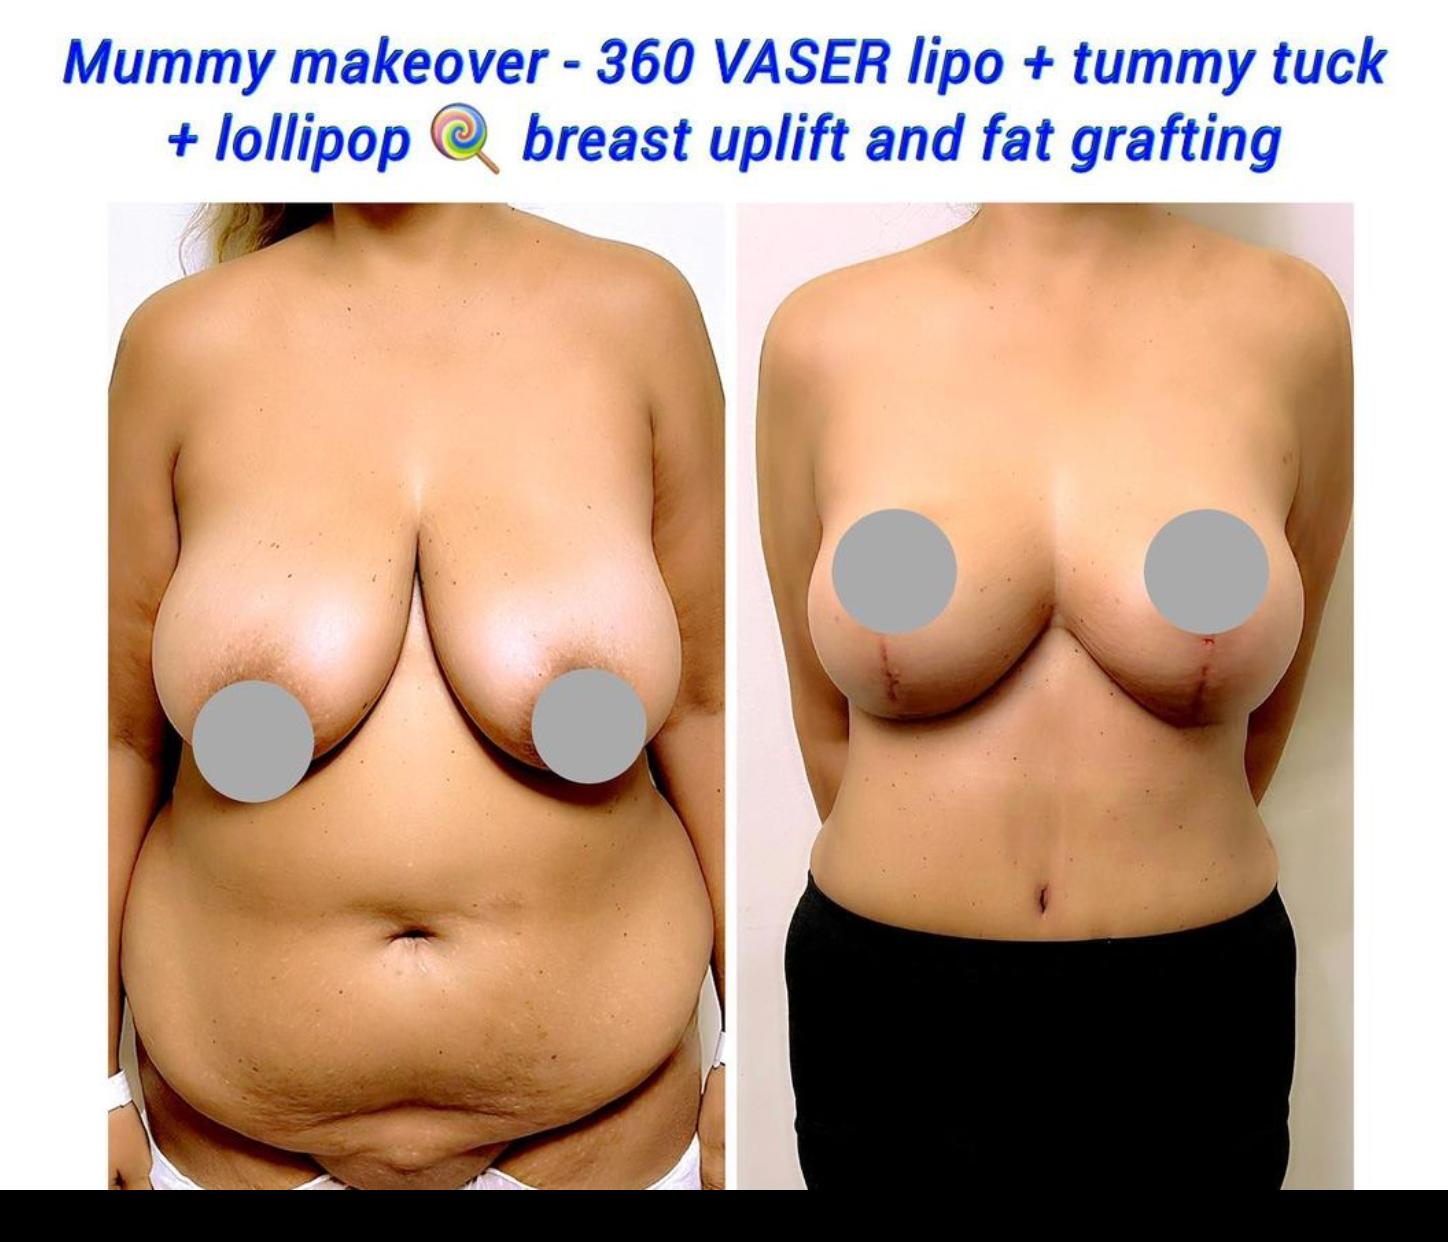 Mummy makeover in London, UK. Breast lift, tummy tuck and vaser liposuction. Tummy tuck scar minimal.